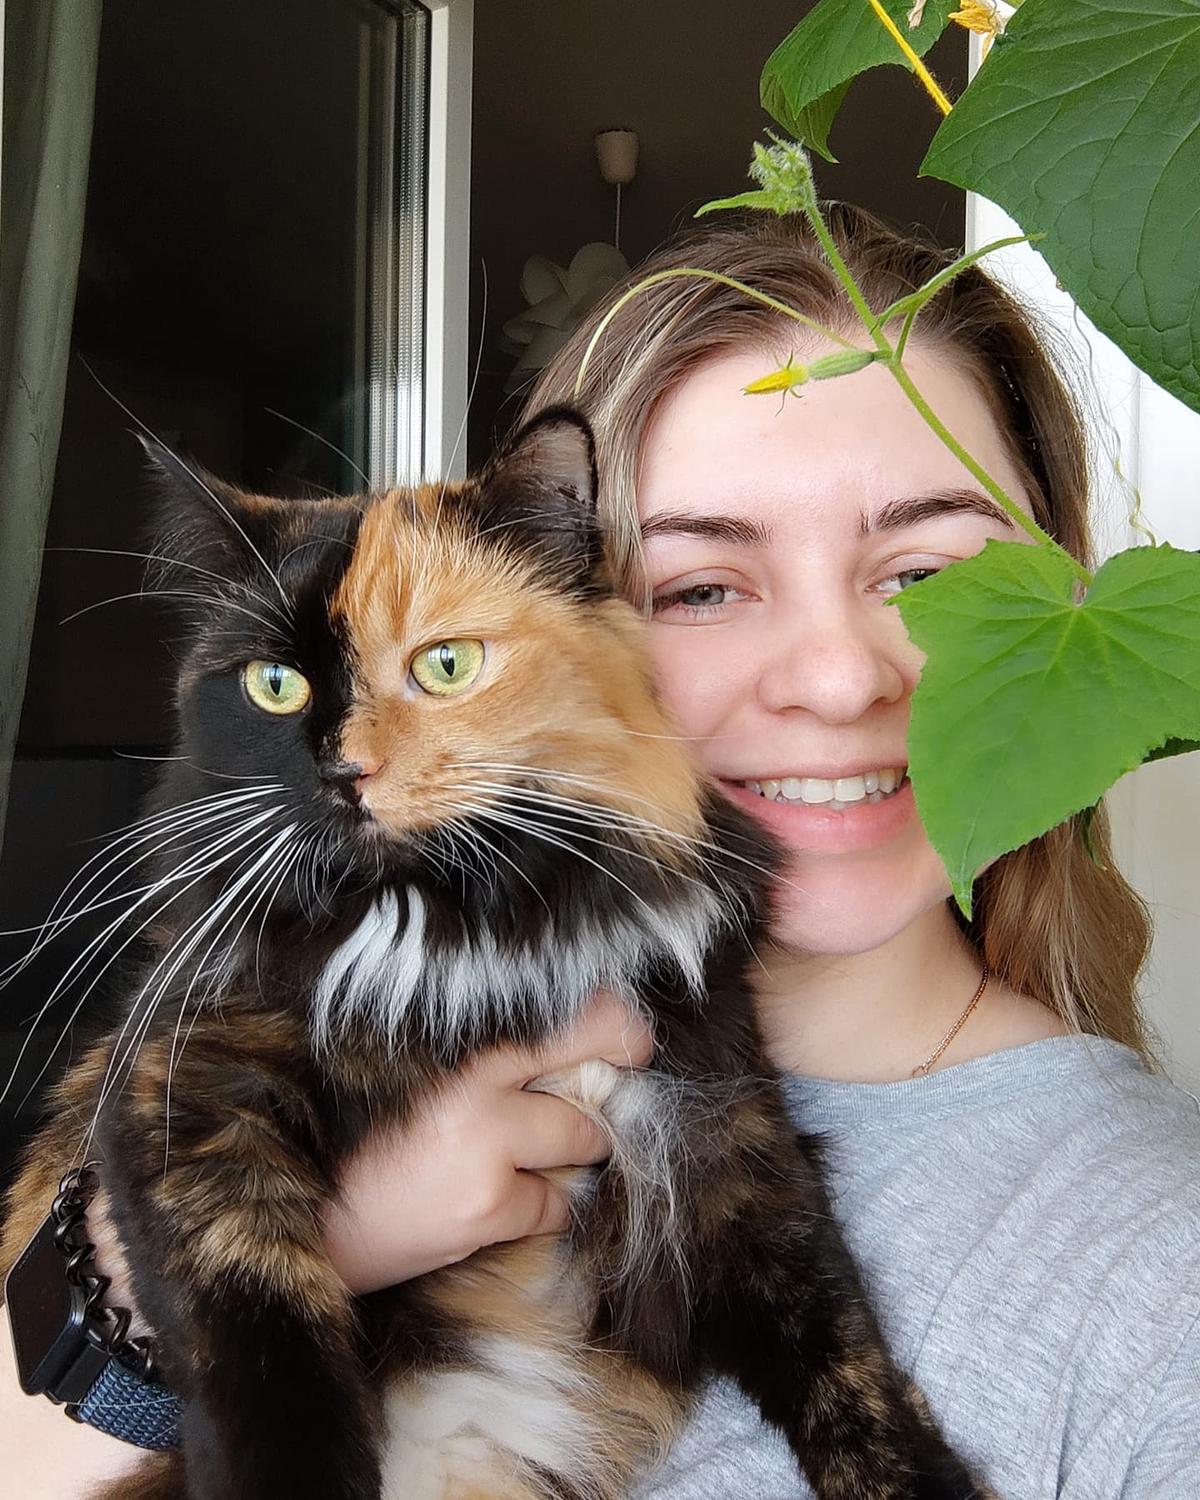 Elizabeth Rubashko with Yana. (Courtesy of <a href="https://www.instagram.com/yanatwofacecat/">Yana the Two-Faced Cat</a>)